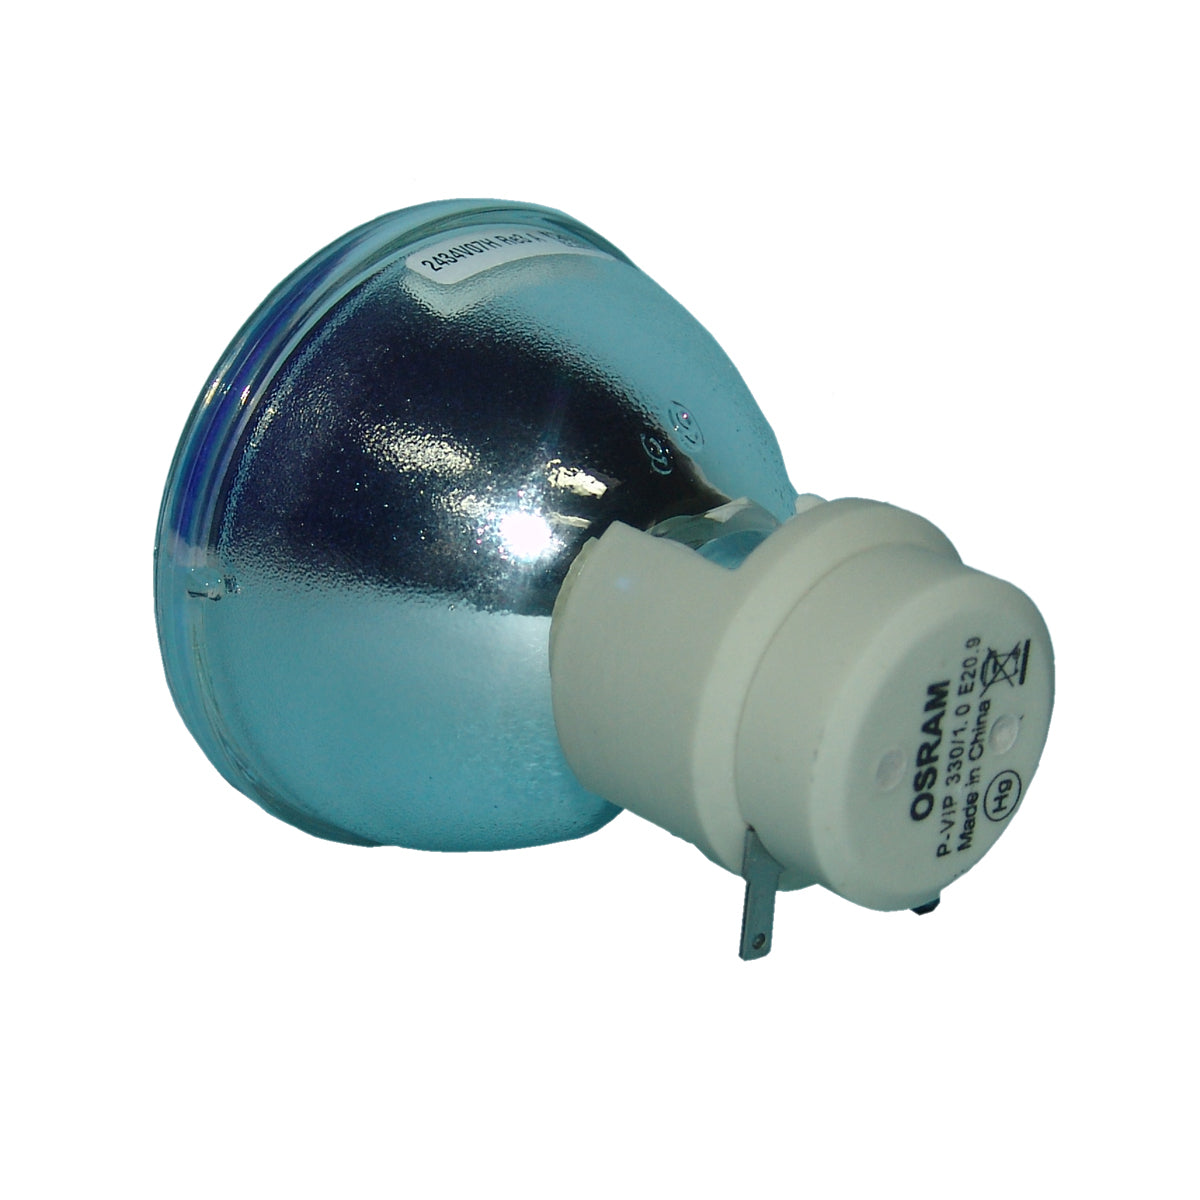 Viewsonic RLC-106 Osram Projector Bare Lamp